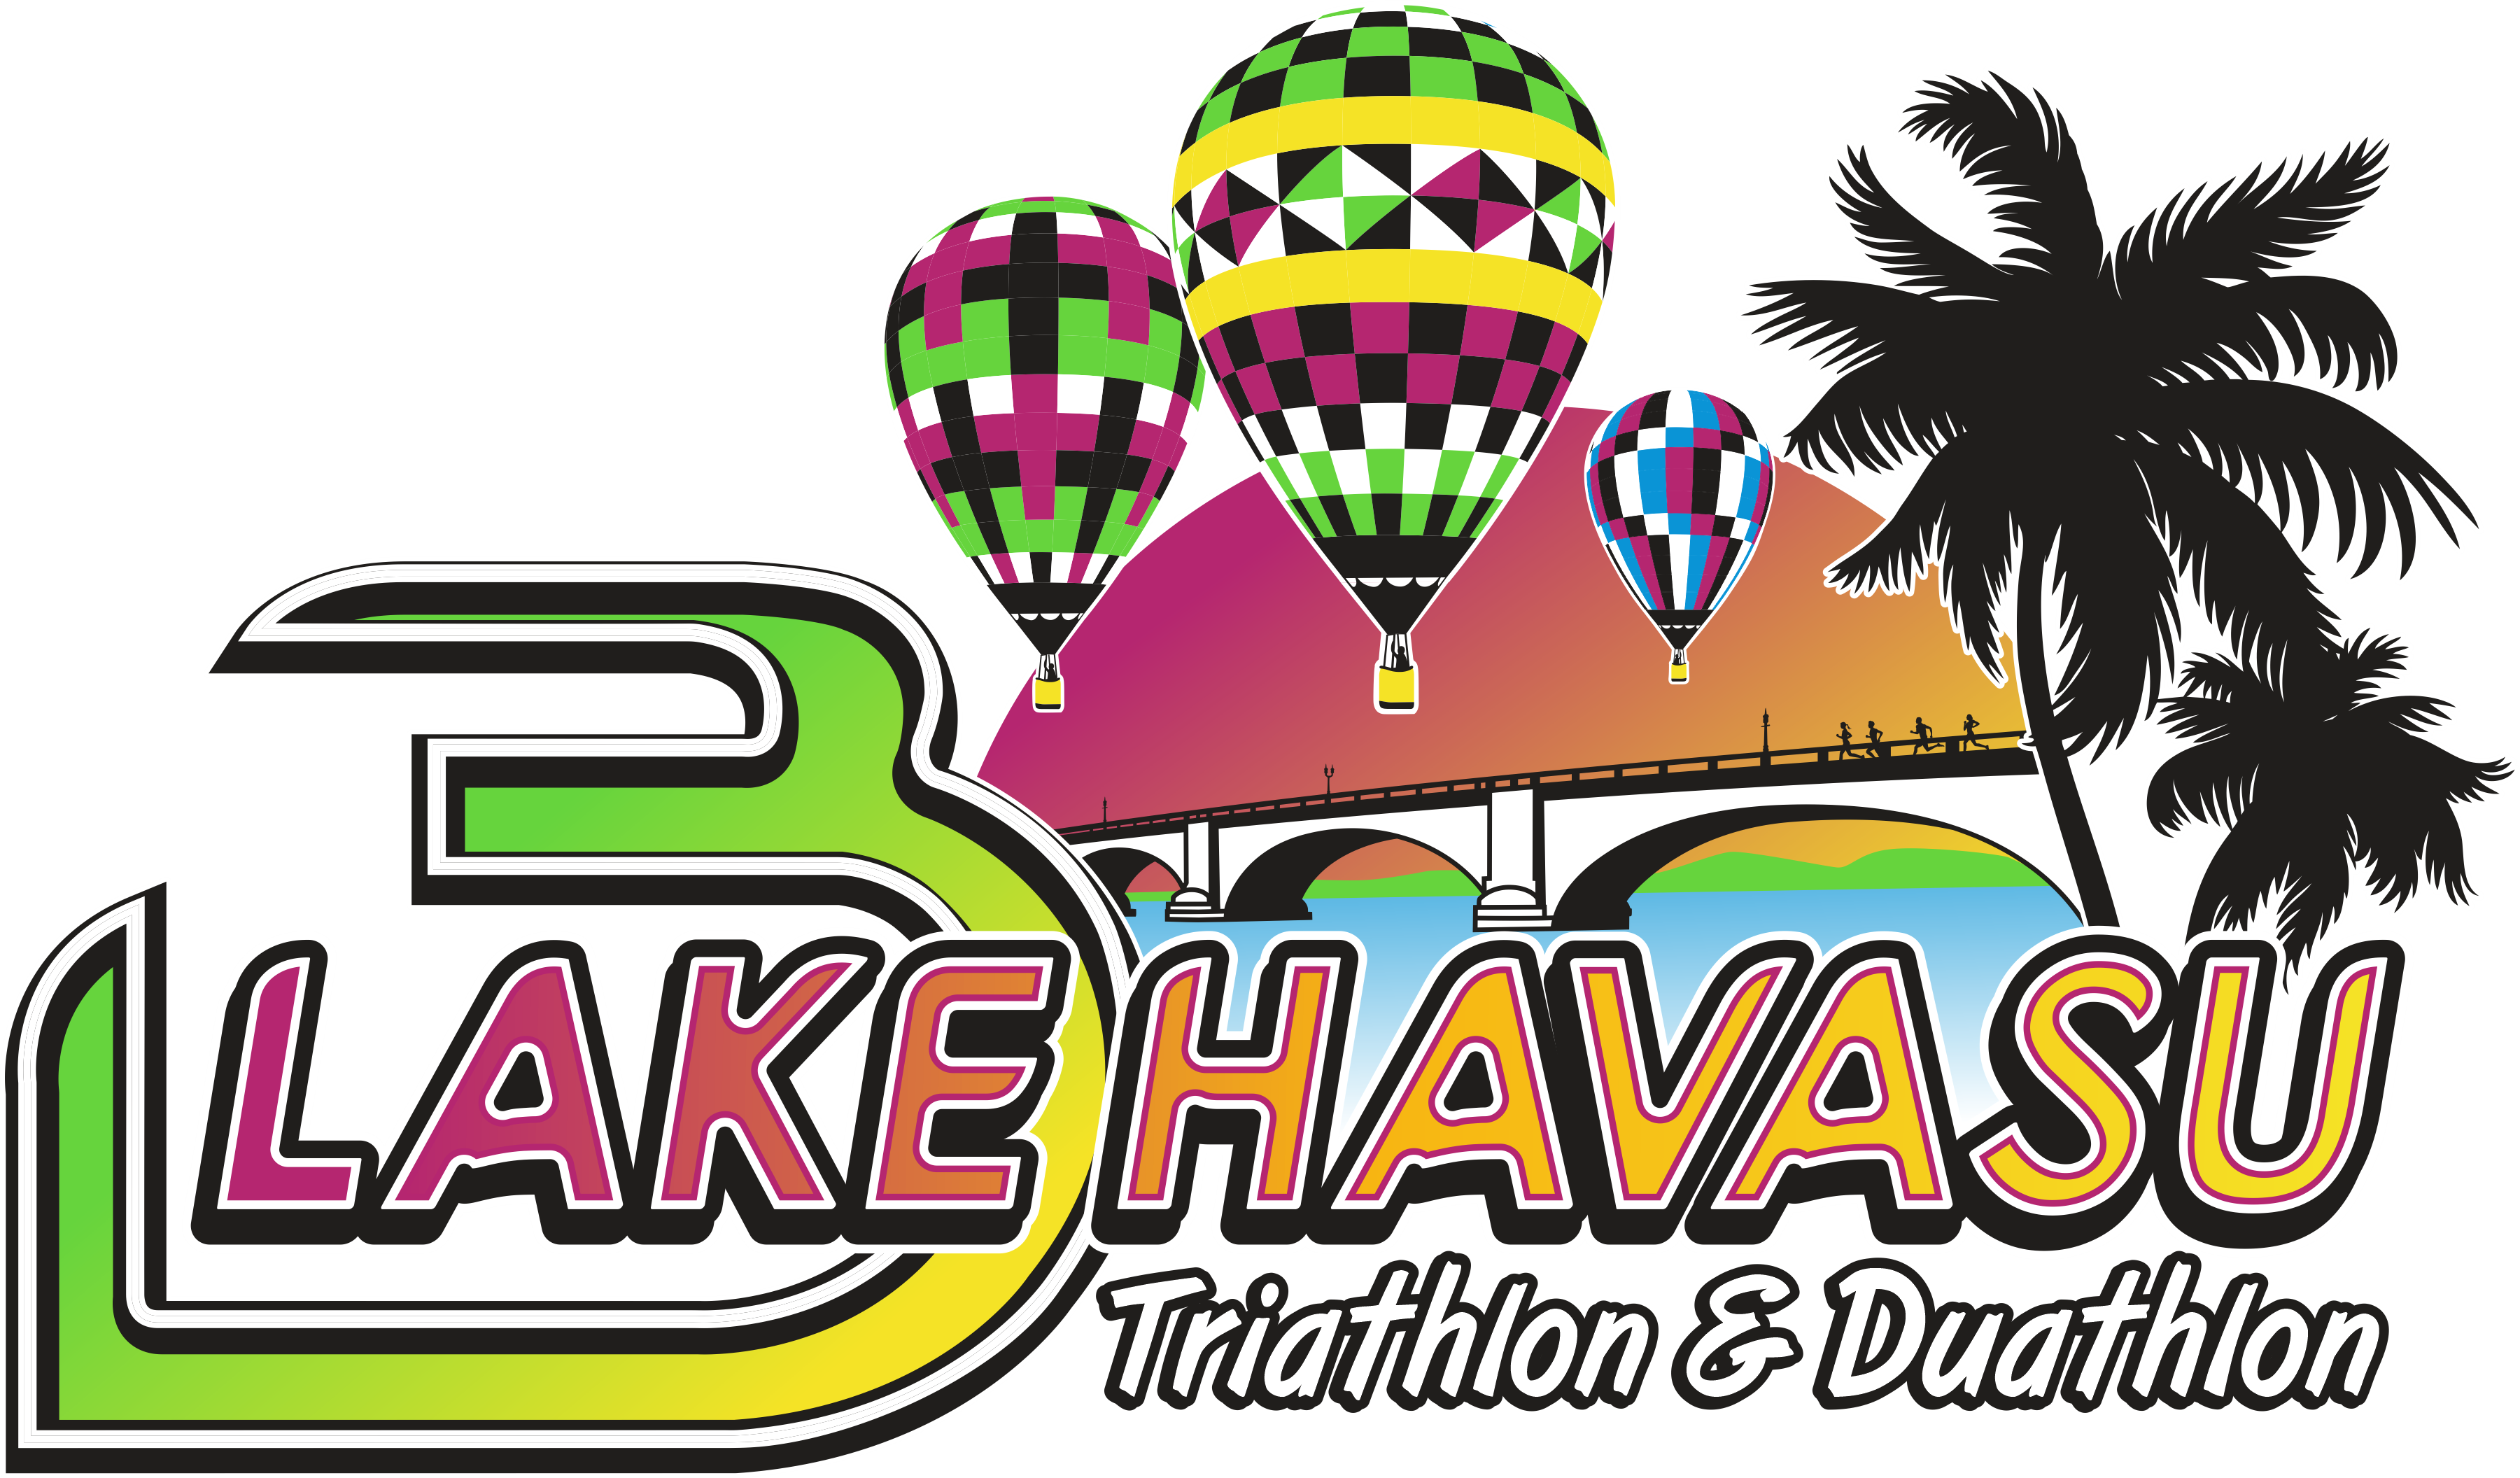 3-Disciplines-Lake-Havasu-1 Athlete Information